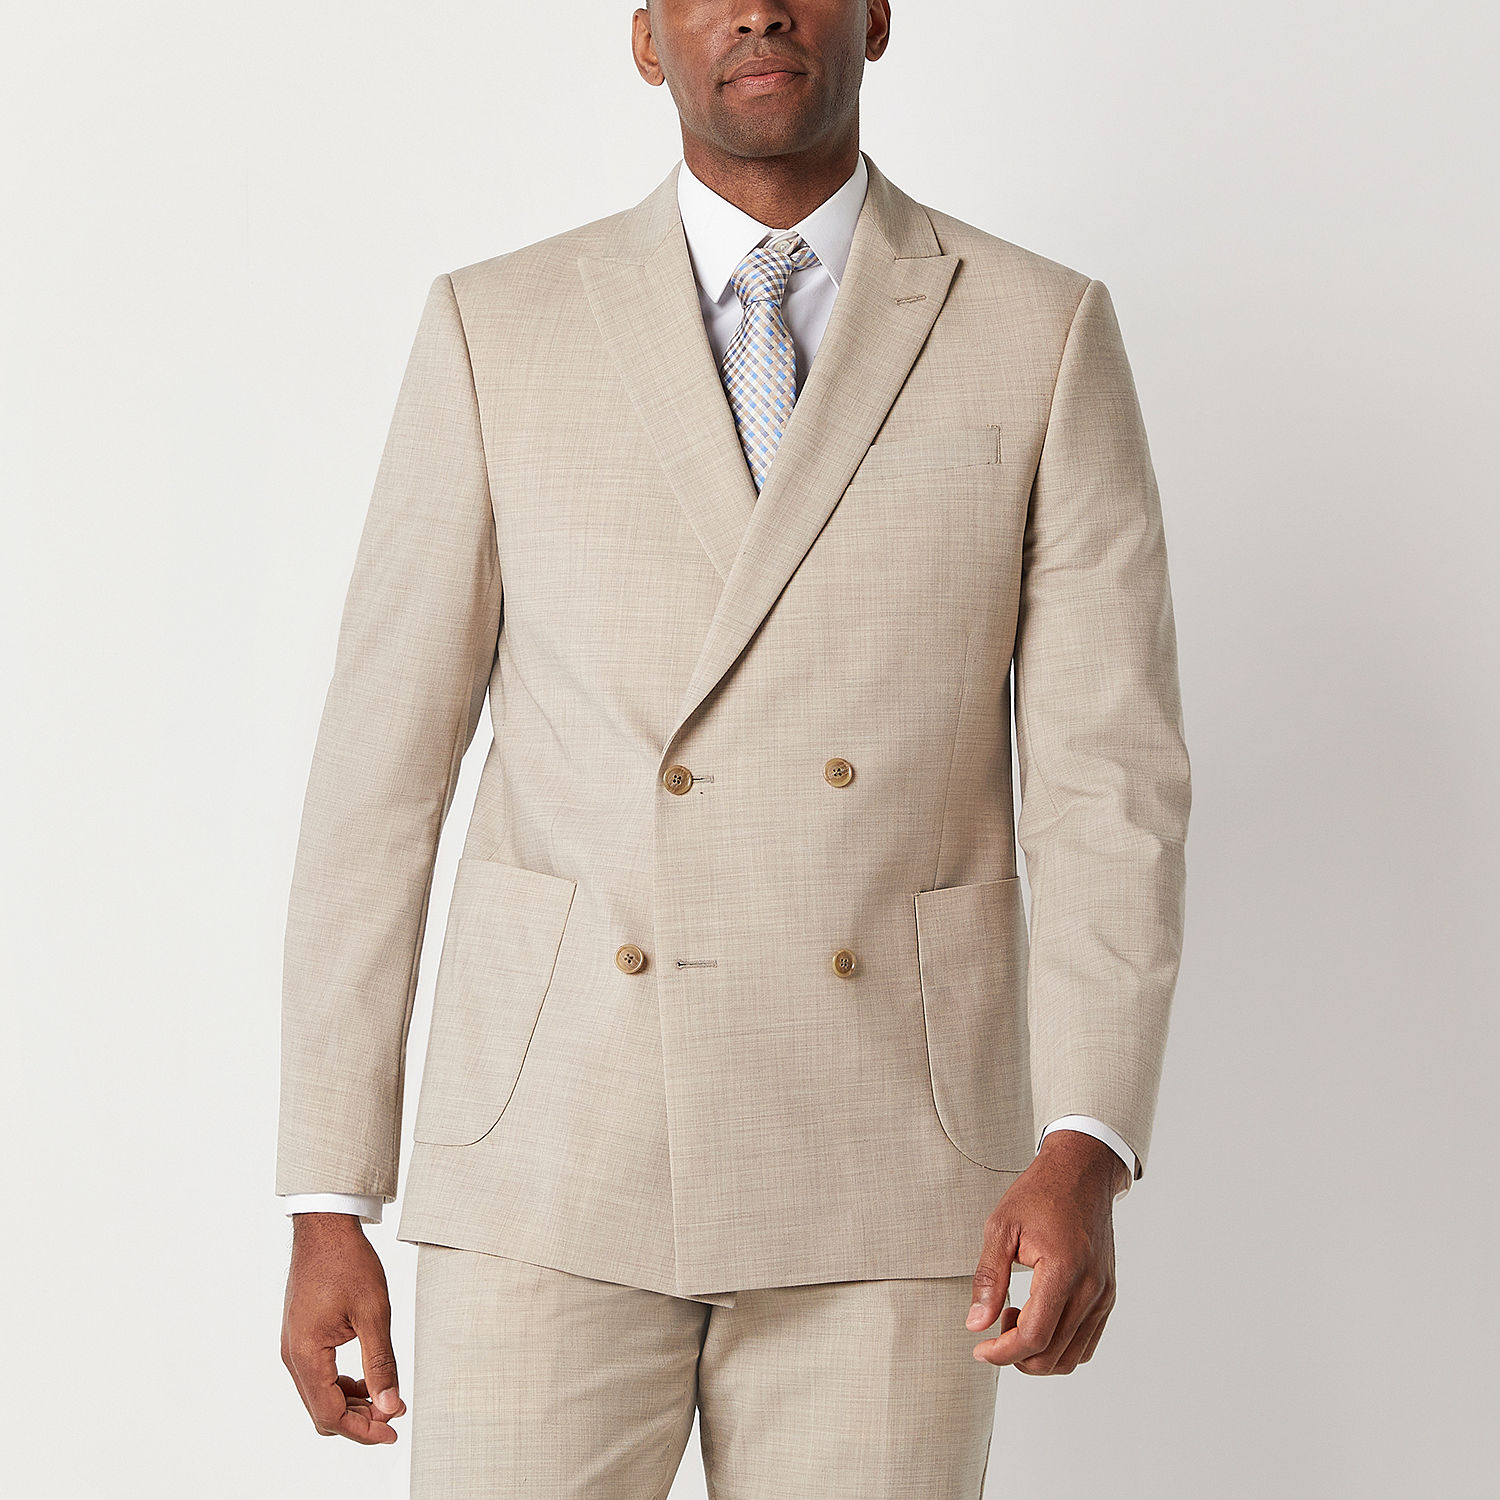 Stafford Signature Coolmax Mens Classic Fit Suit Jacket, Color: Light ...